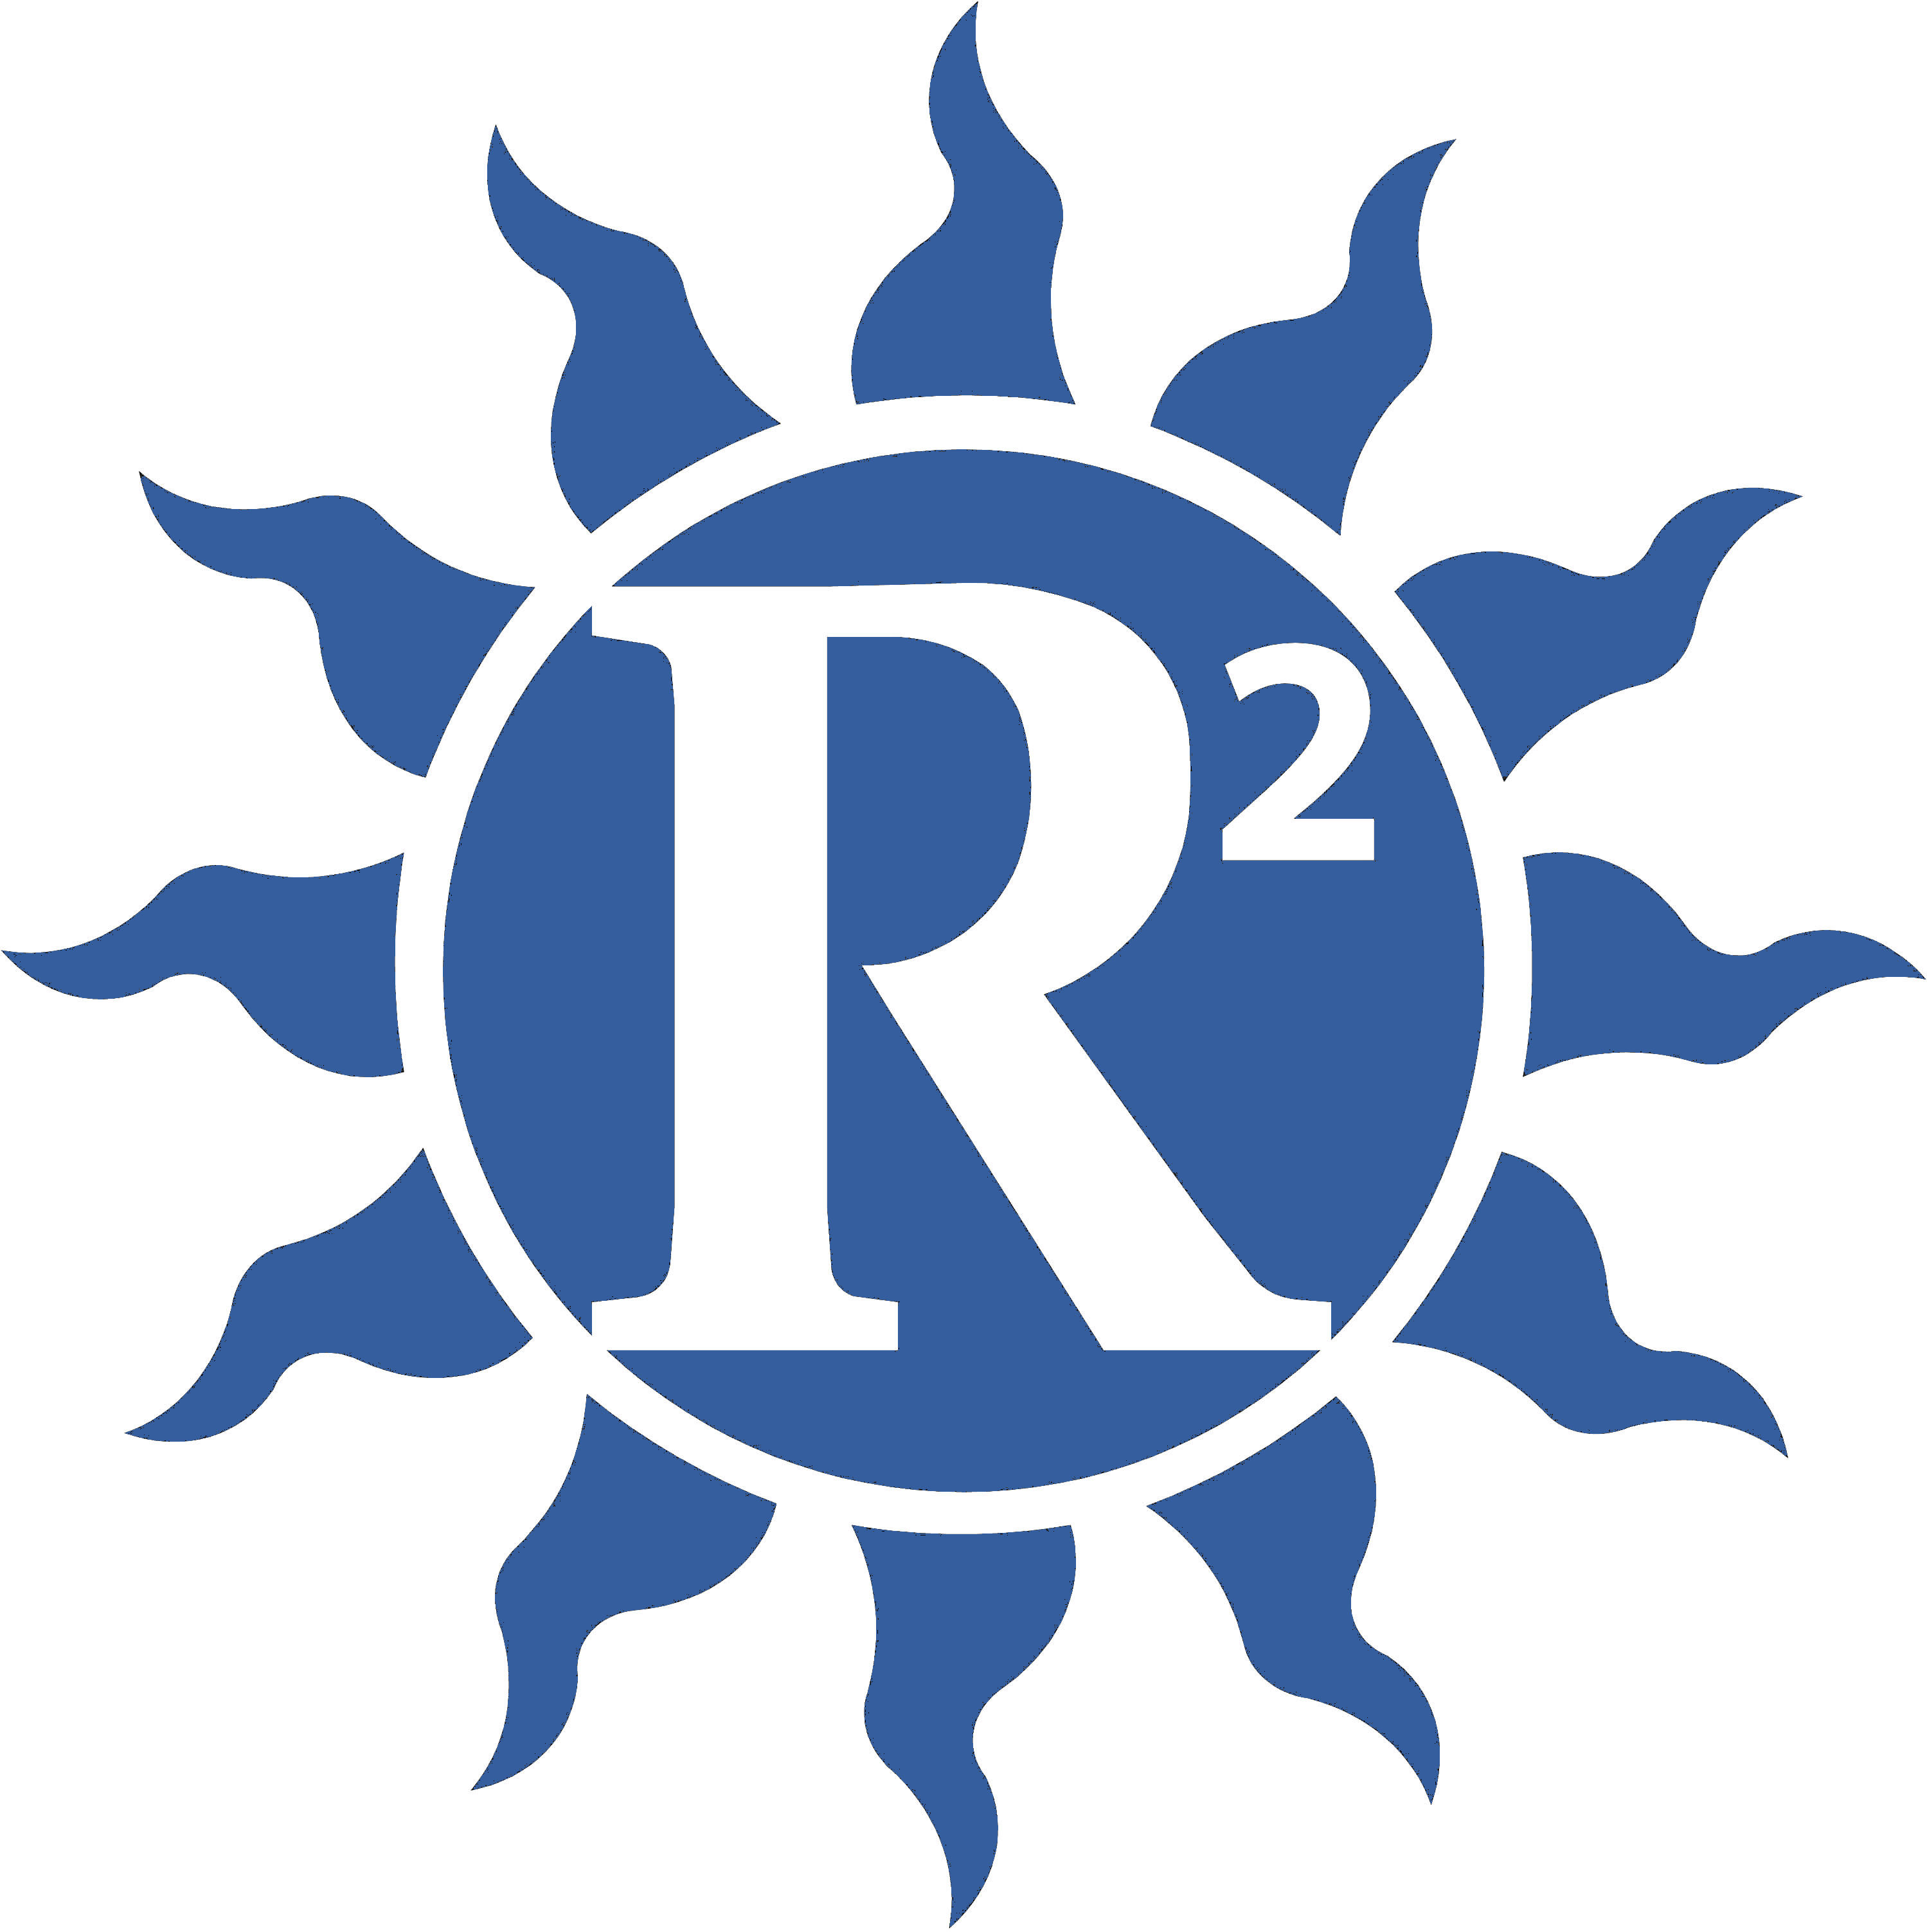 Robertas-Raker Squared BLUE logo.jpg